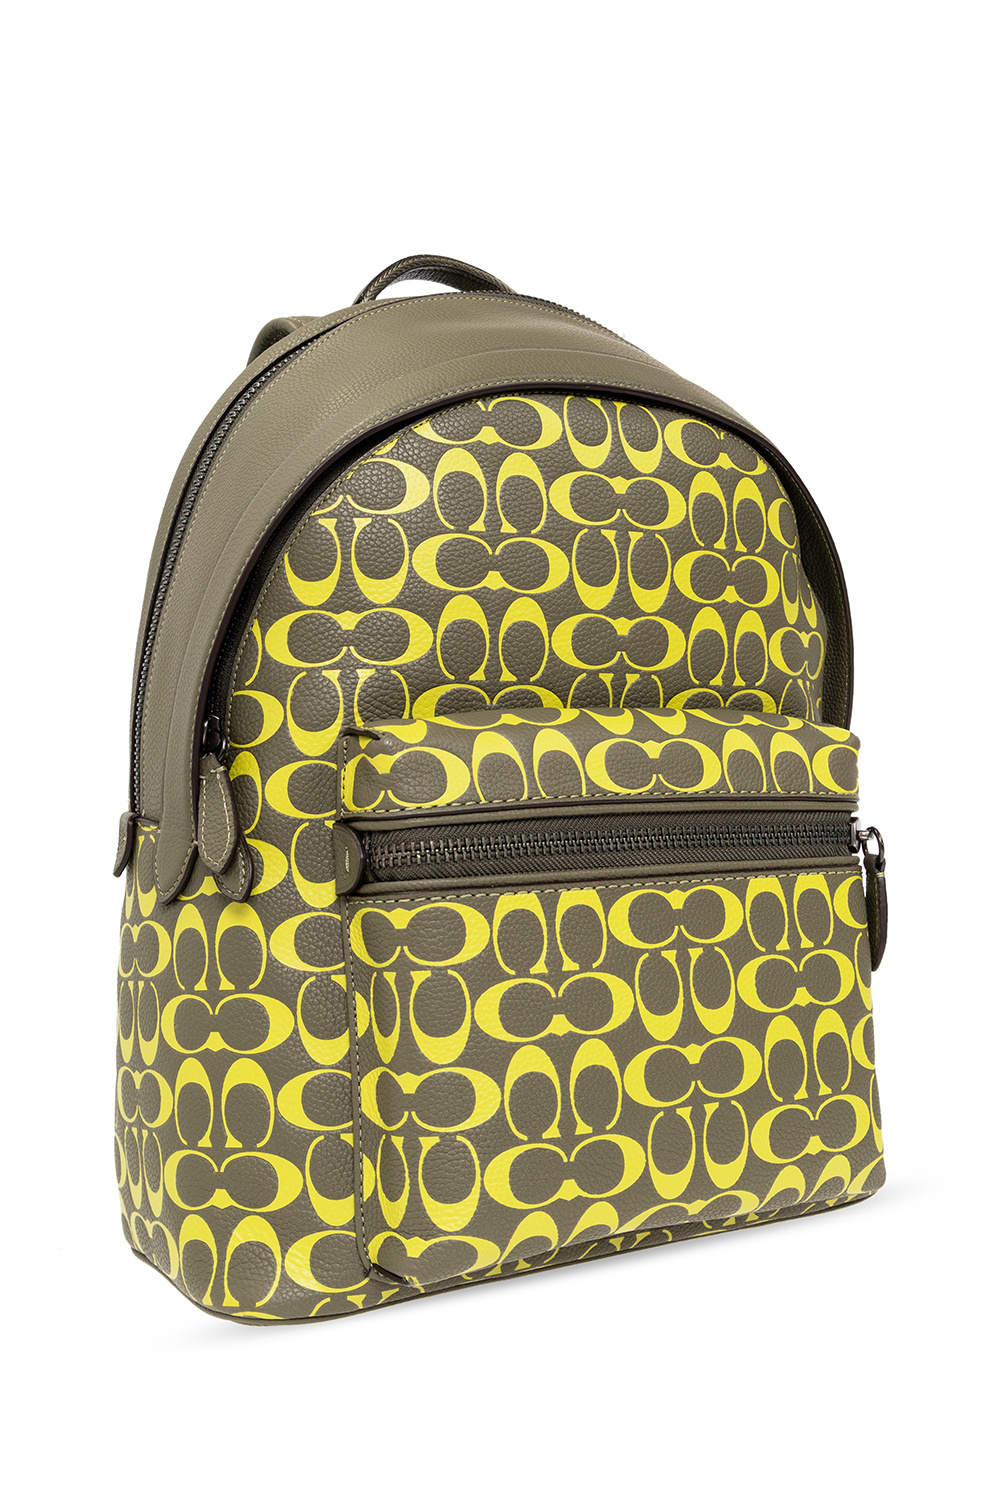 Coach x BAPE Leather-Trim Canvas Backpack